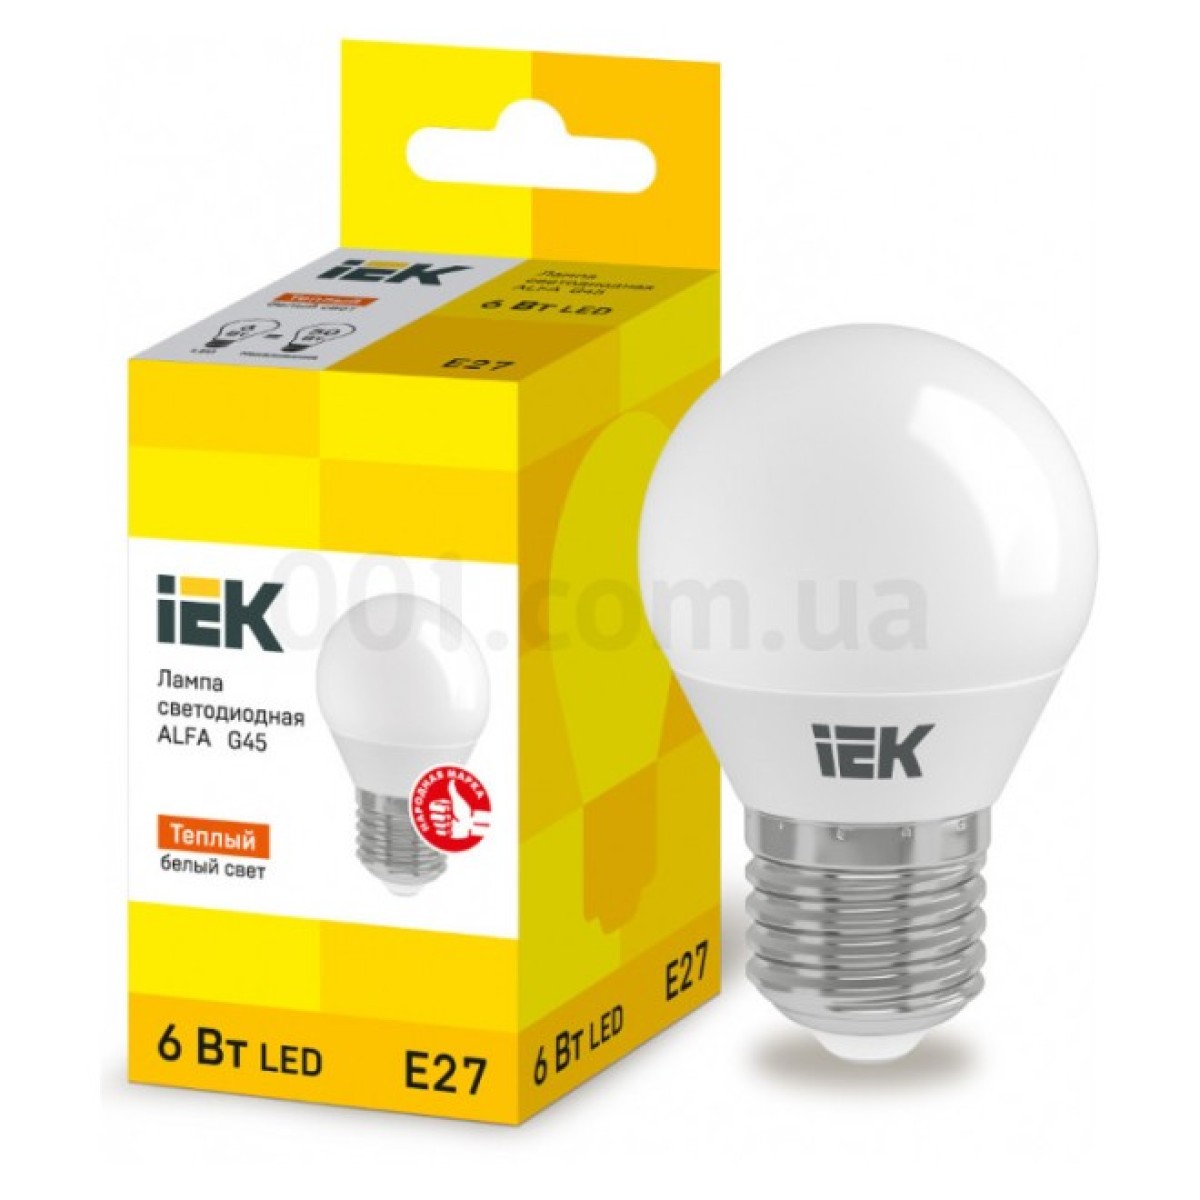 Светодиодная лампа LED ALFA G45 (шар) 6 Вт 230В 3000К E27, IEK 256_256.jpg